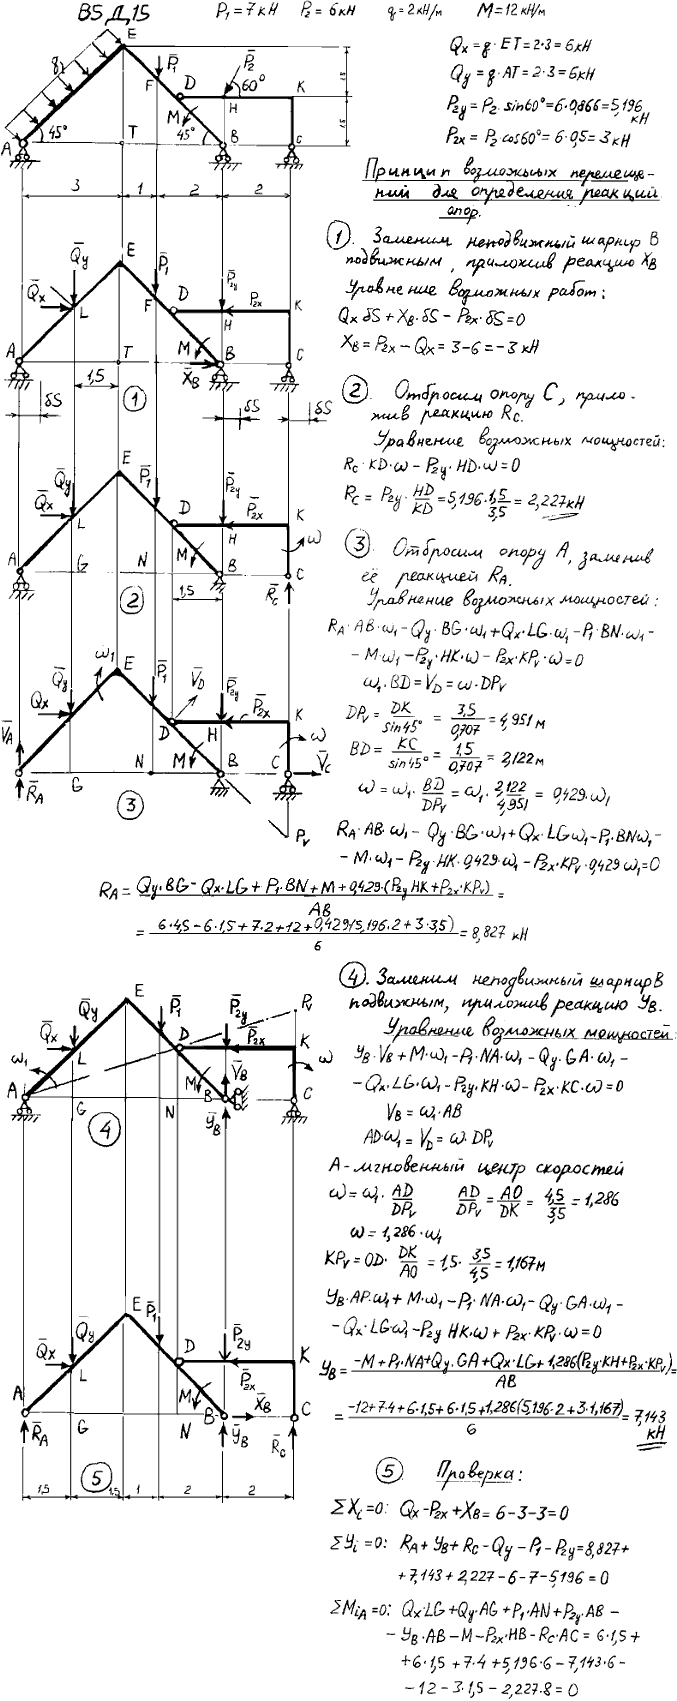 Задание Д.15 вариант 5. P1=7 кН, P2=6 кН, q=2 кН/м, M=12 кН*м